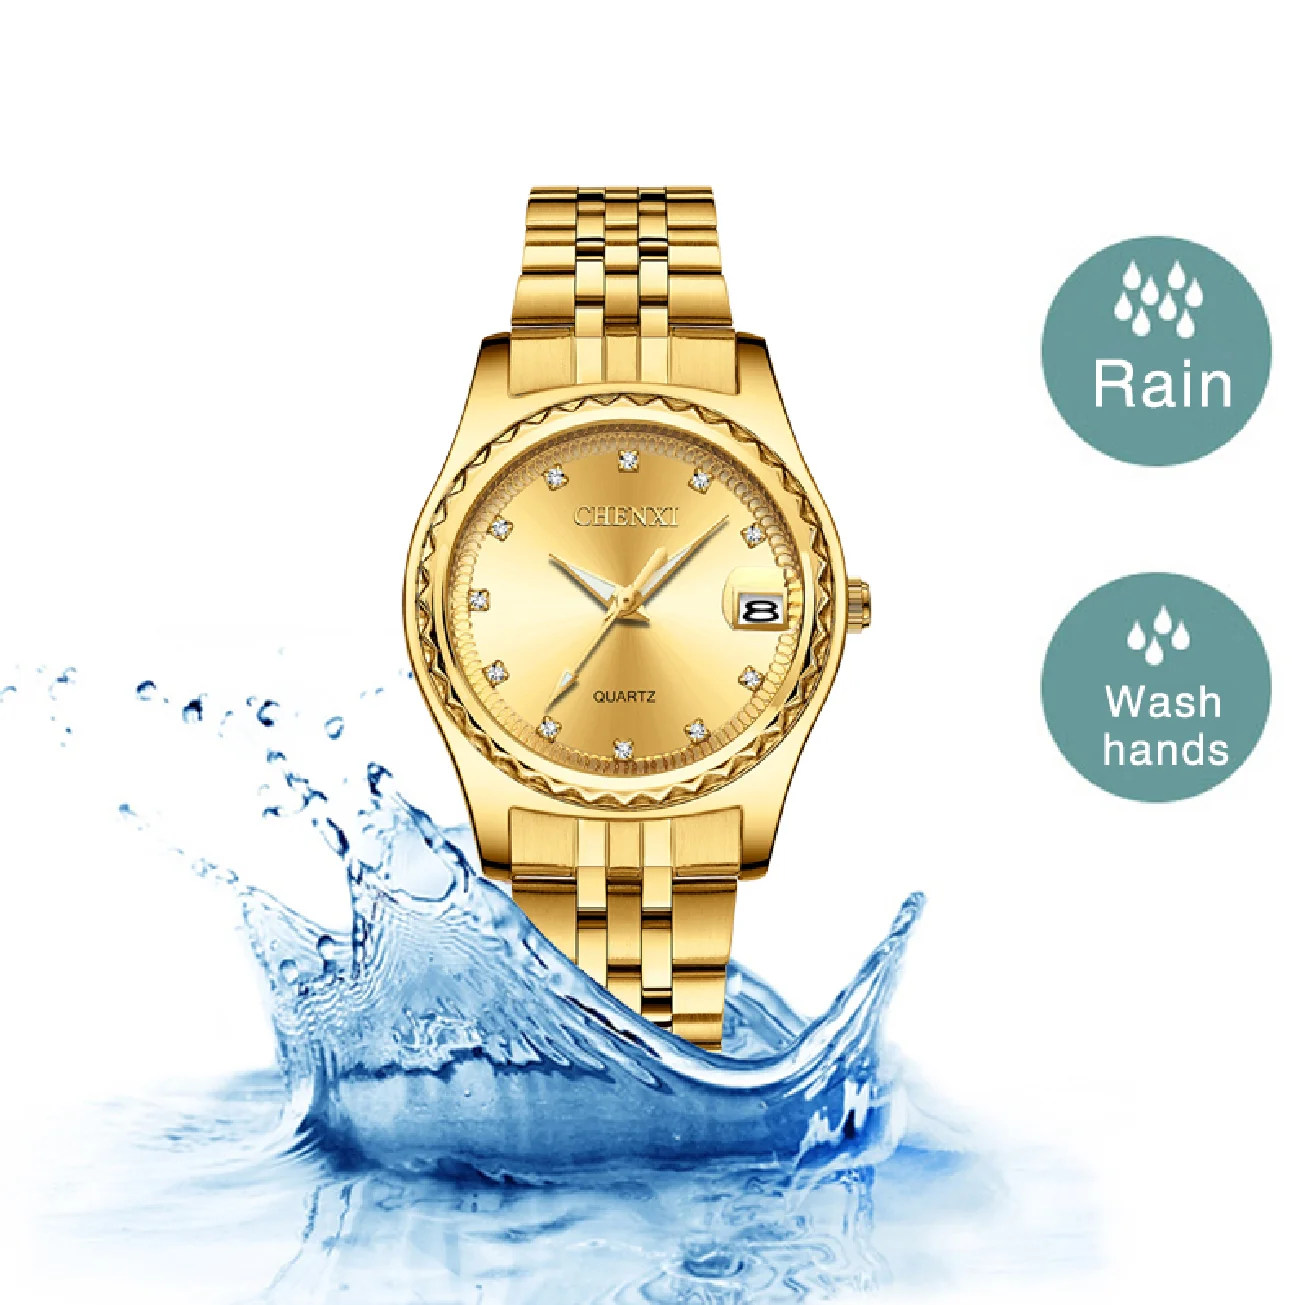 CHENXI Luxury New Women Calendar Watch Fashion Waterproof Analog Quartz Wrist Watch Dress Ladies Watches Gift for Girls Wife enlarge